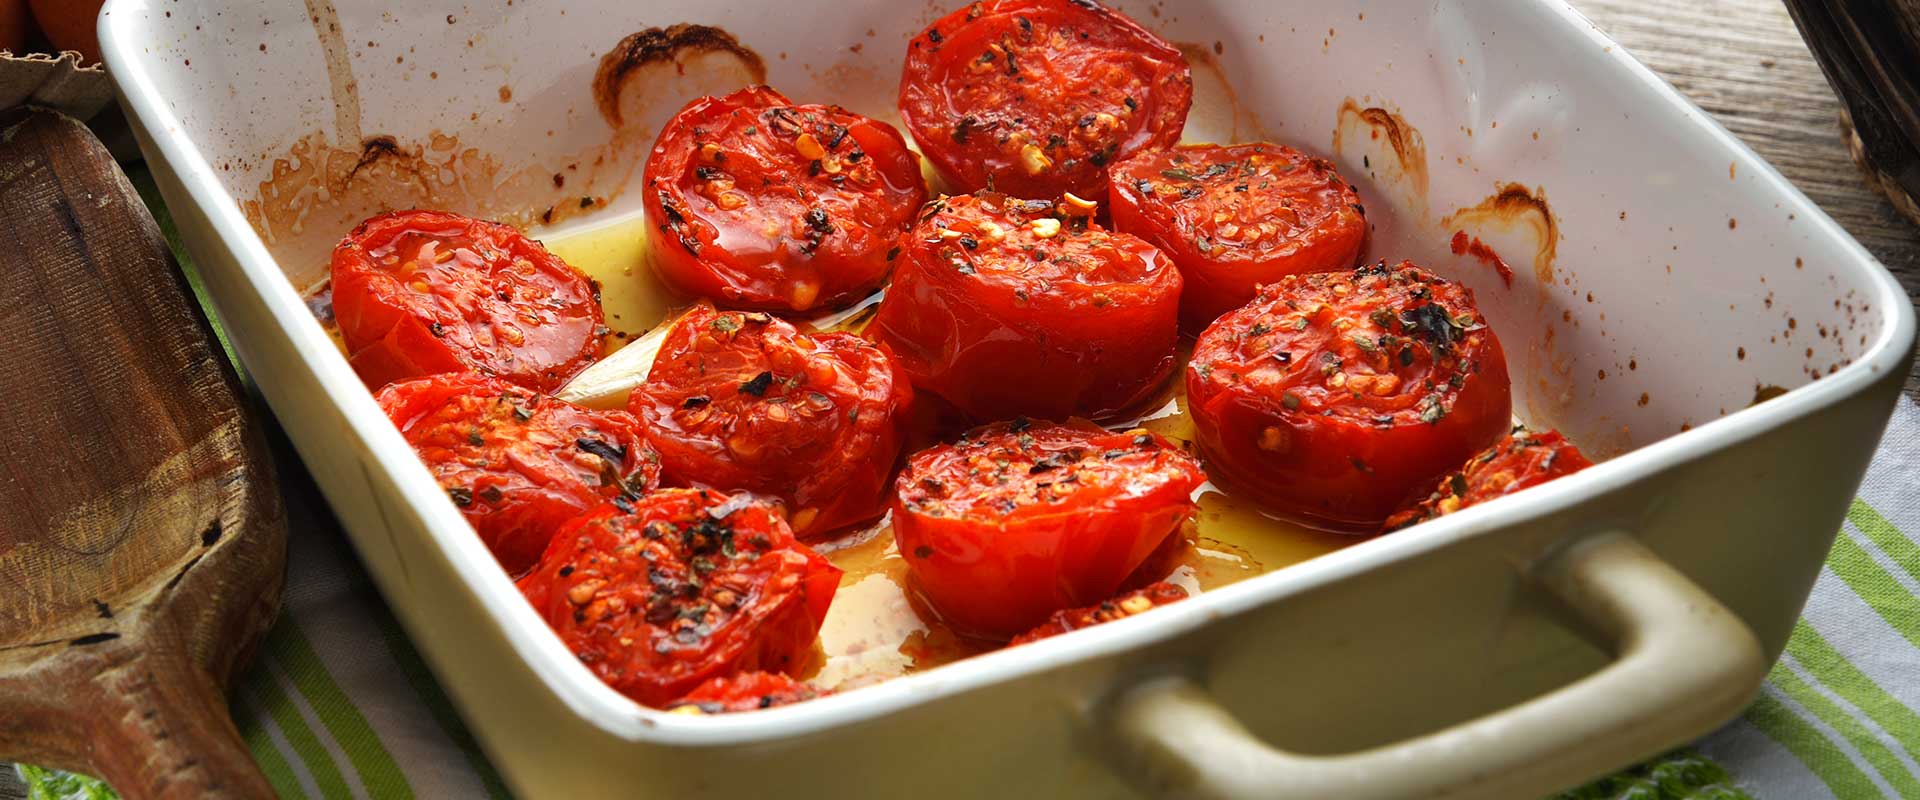 Gratinierte Tomaten mit Sardinenfilets | Fratelli Carli AT